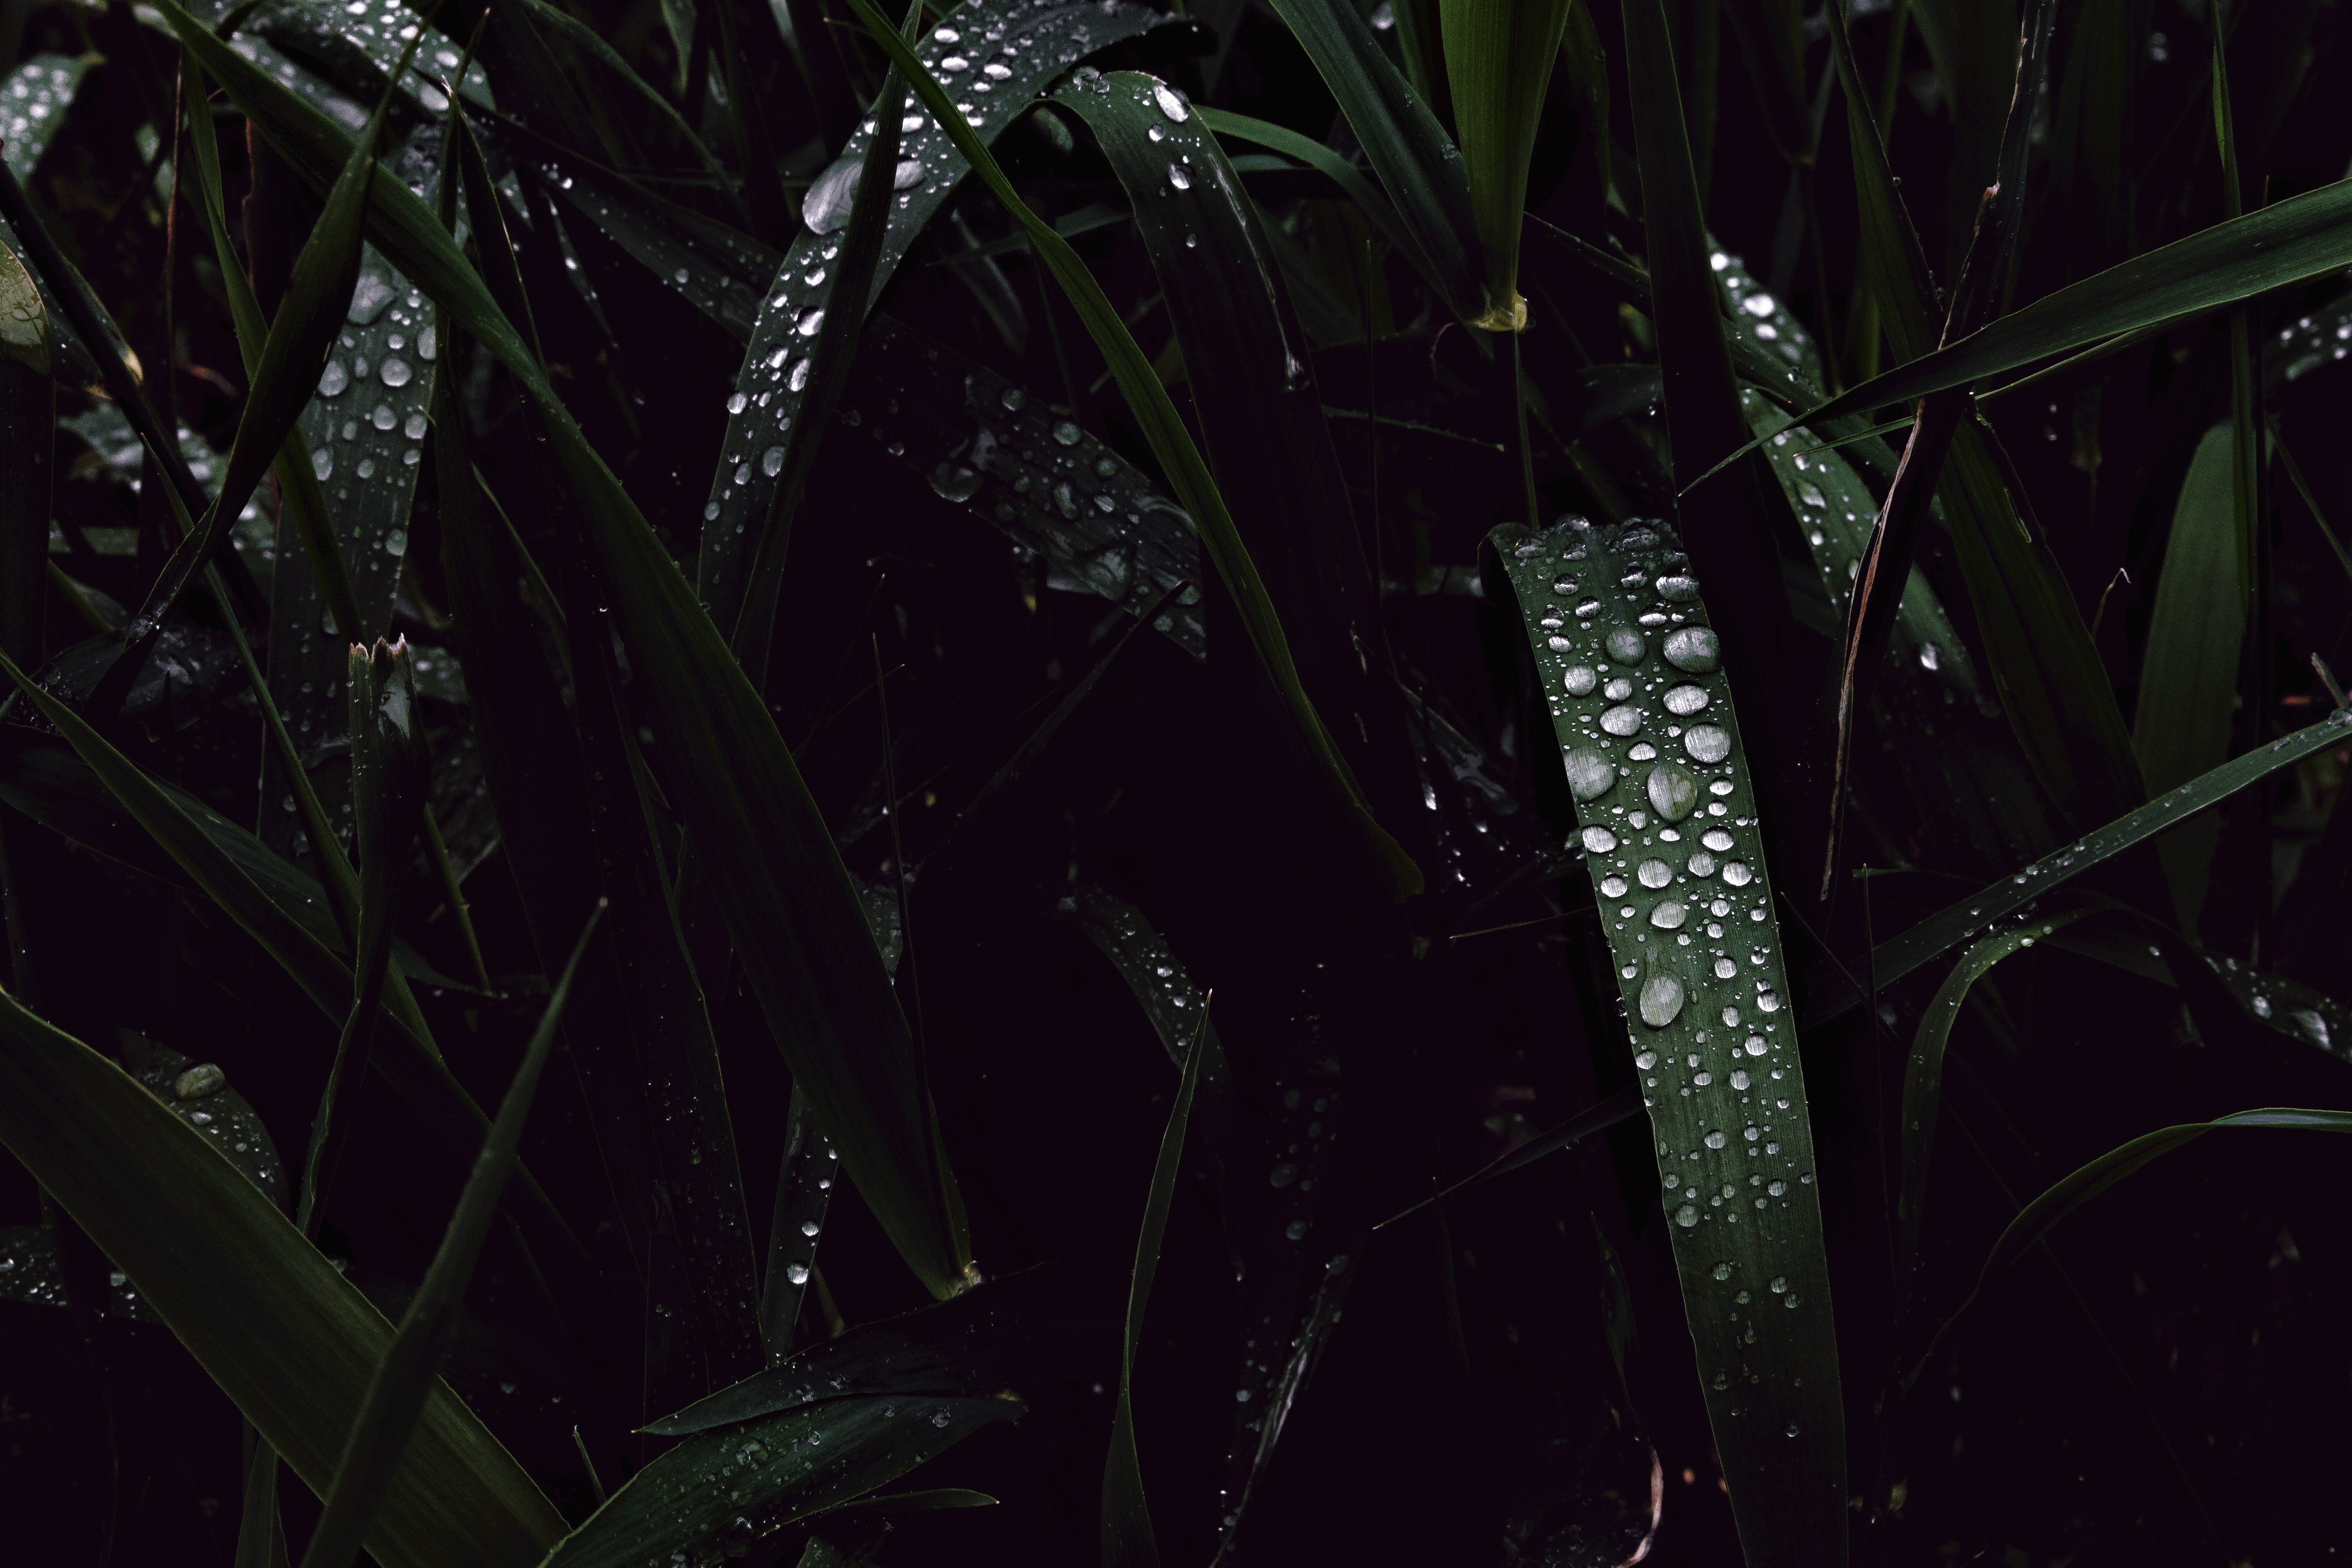 dewdrops on grass in the dark